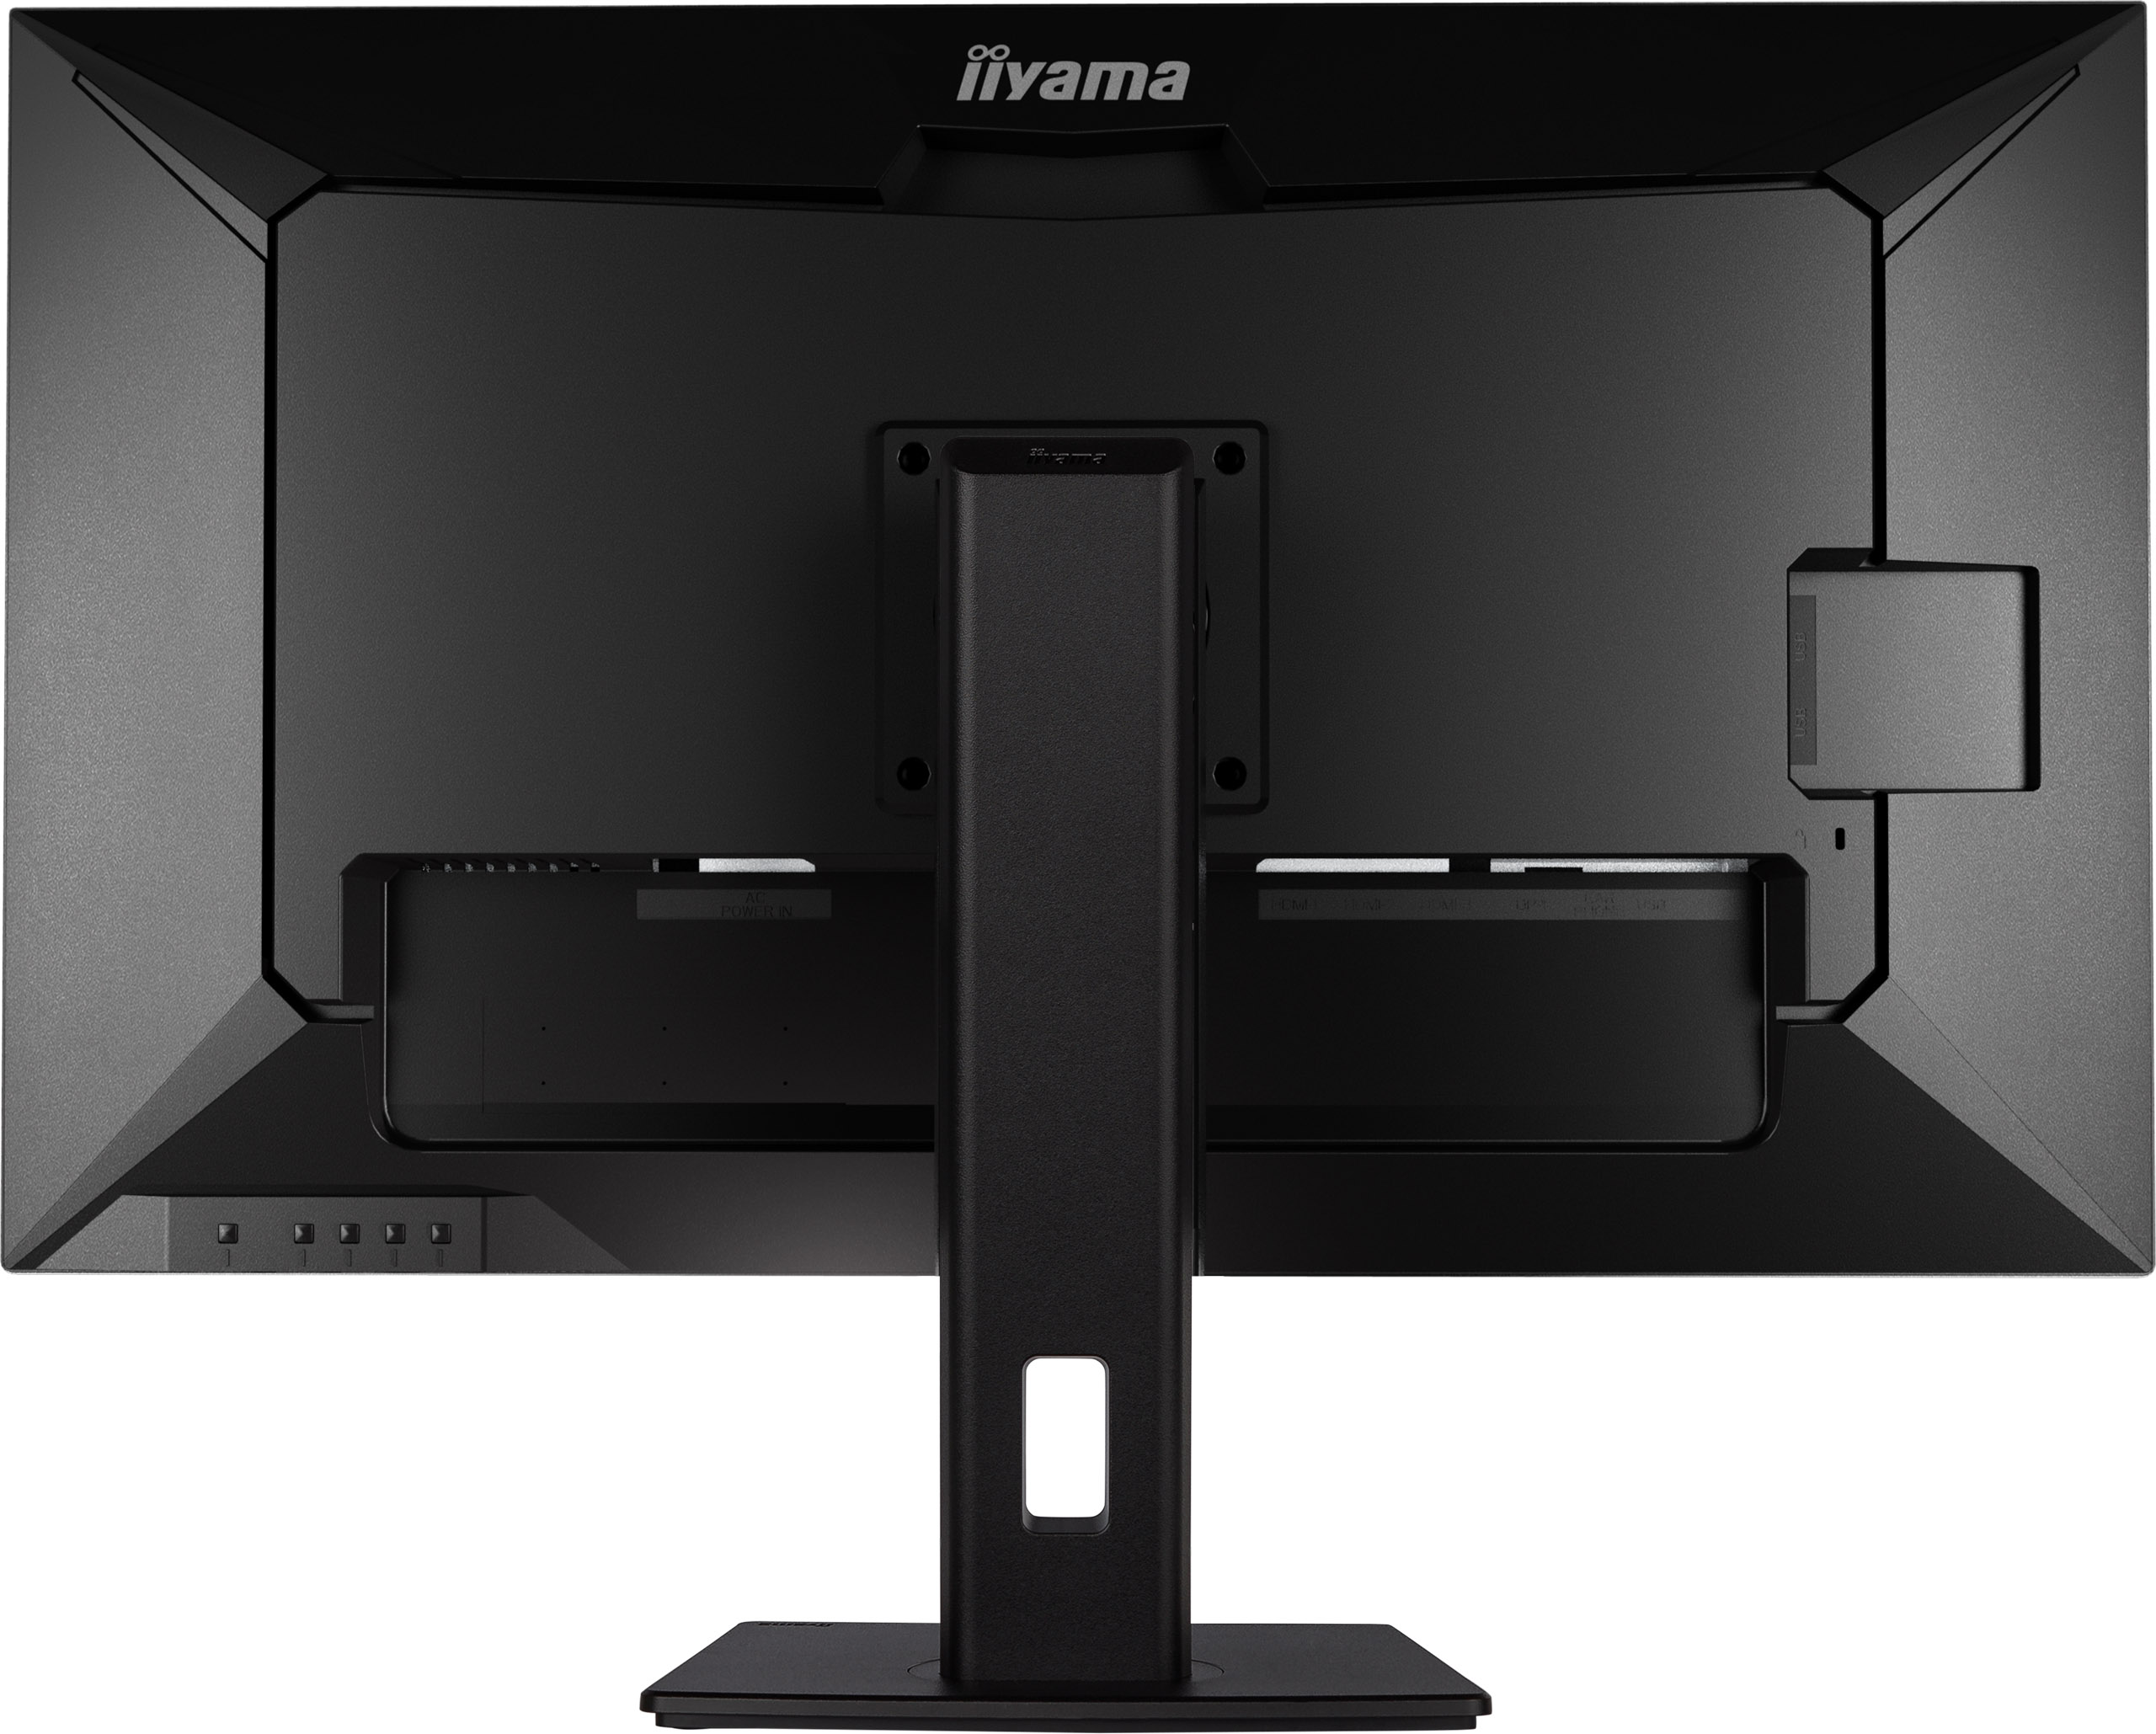 iiyama ProLite XUB3293UHSN-B5 - 32 Zoll - 350 cd/m² - Ultra-HD - 3840x2160 Pixel - Monitor